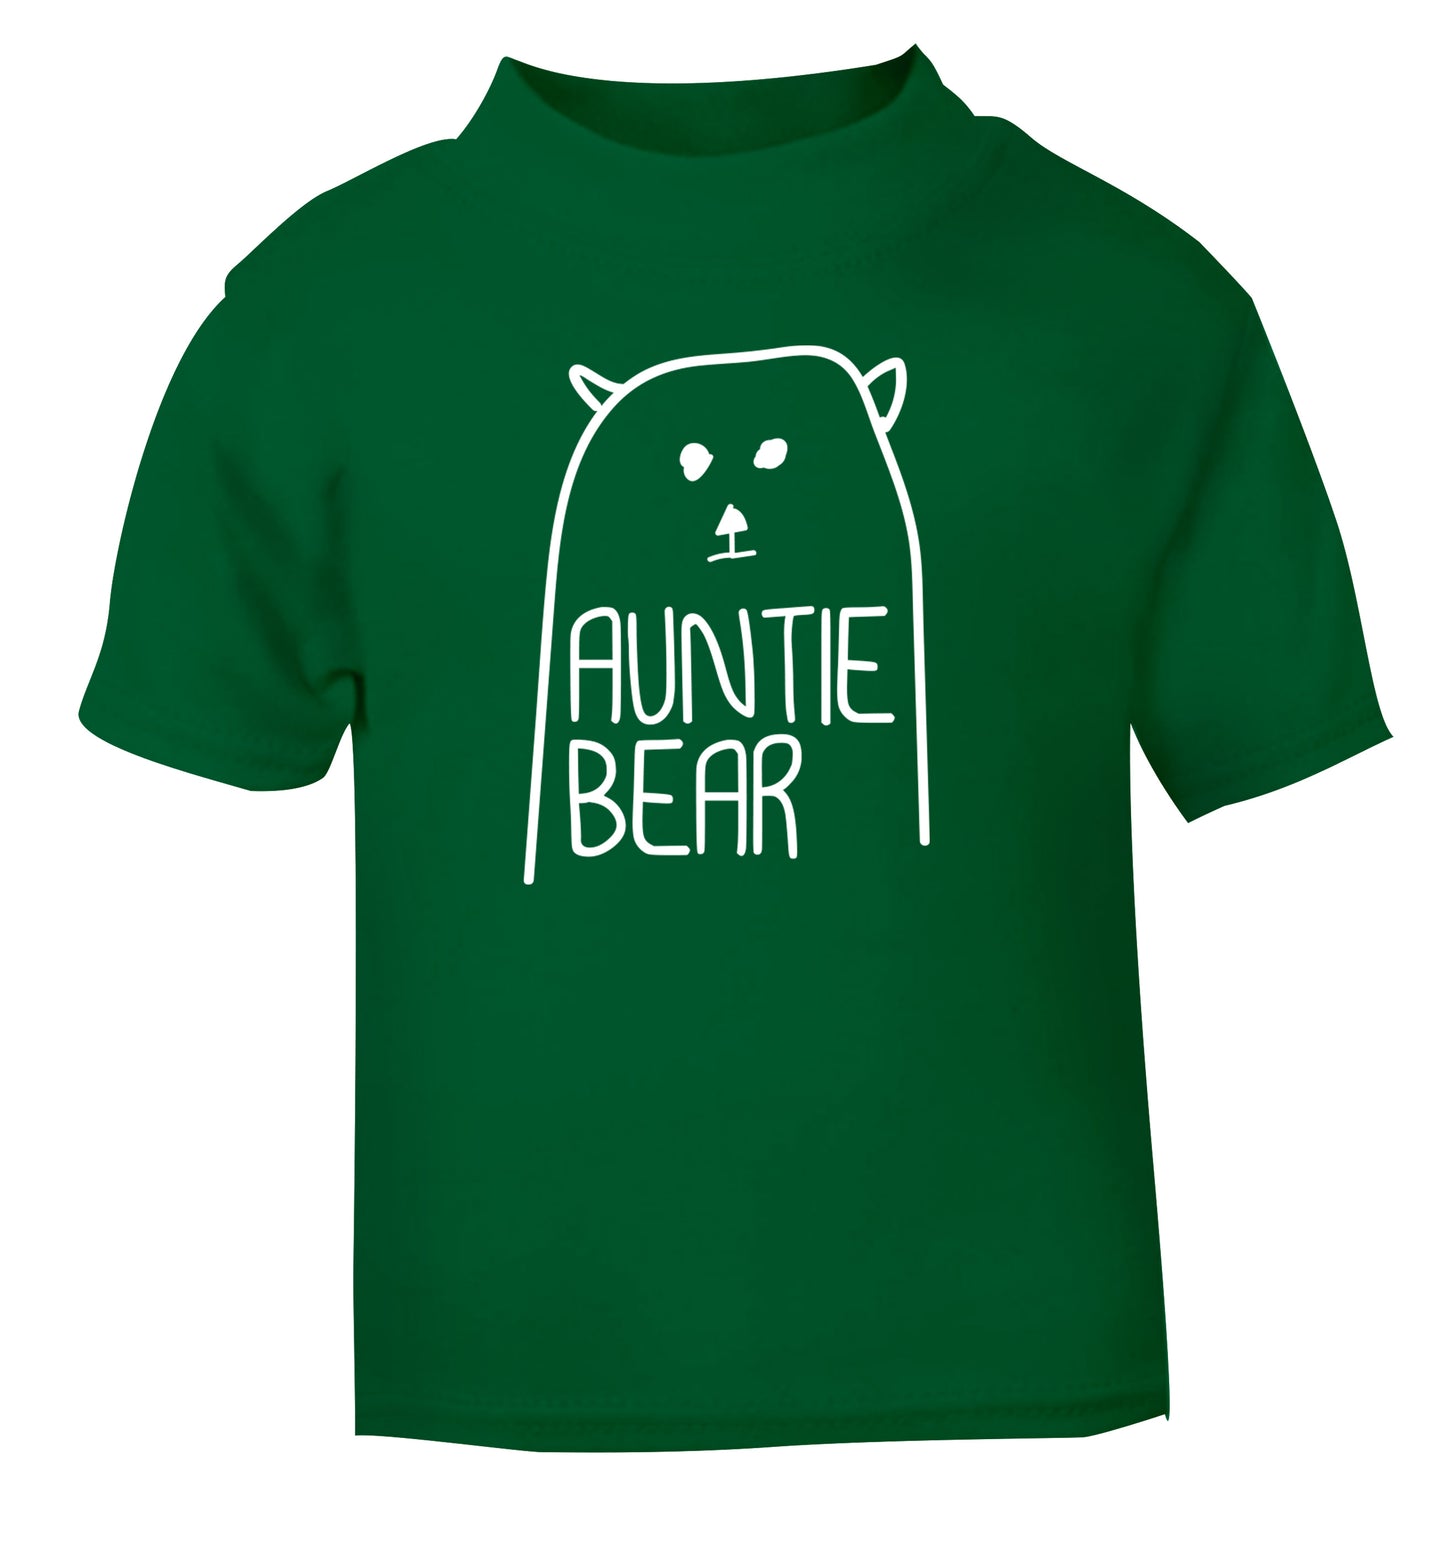 Auntie bear green Baby Toddler Tshirt 2 Years